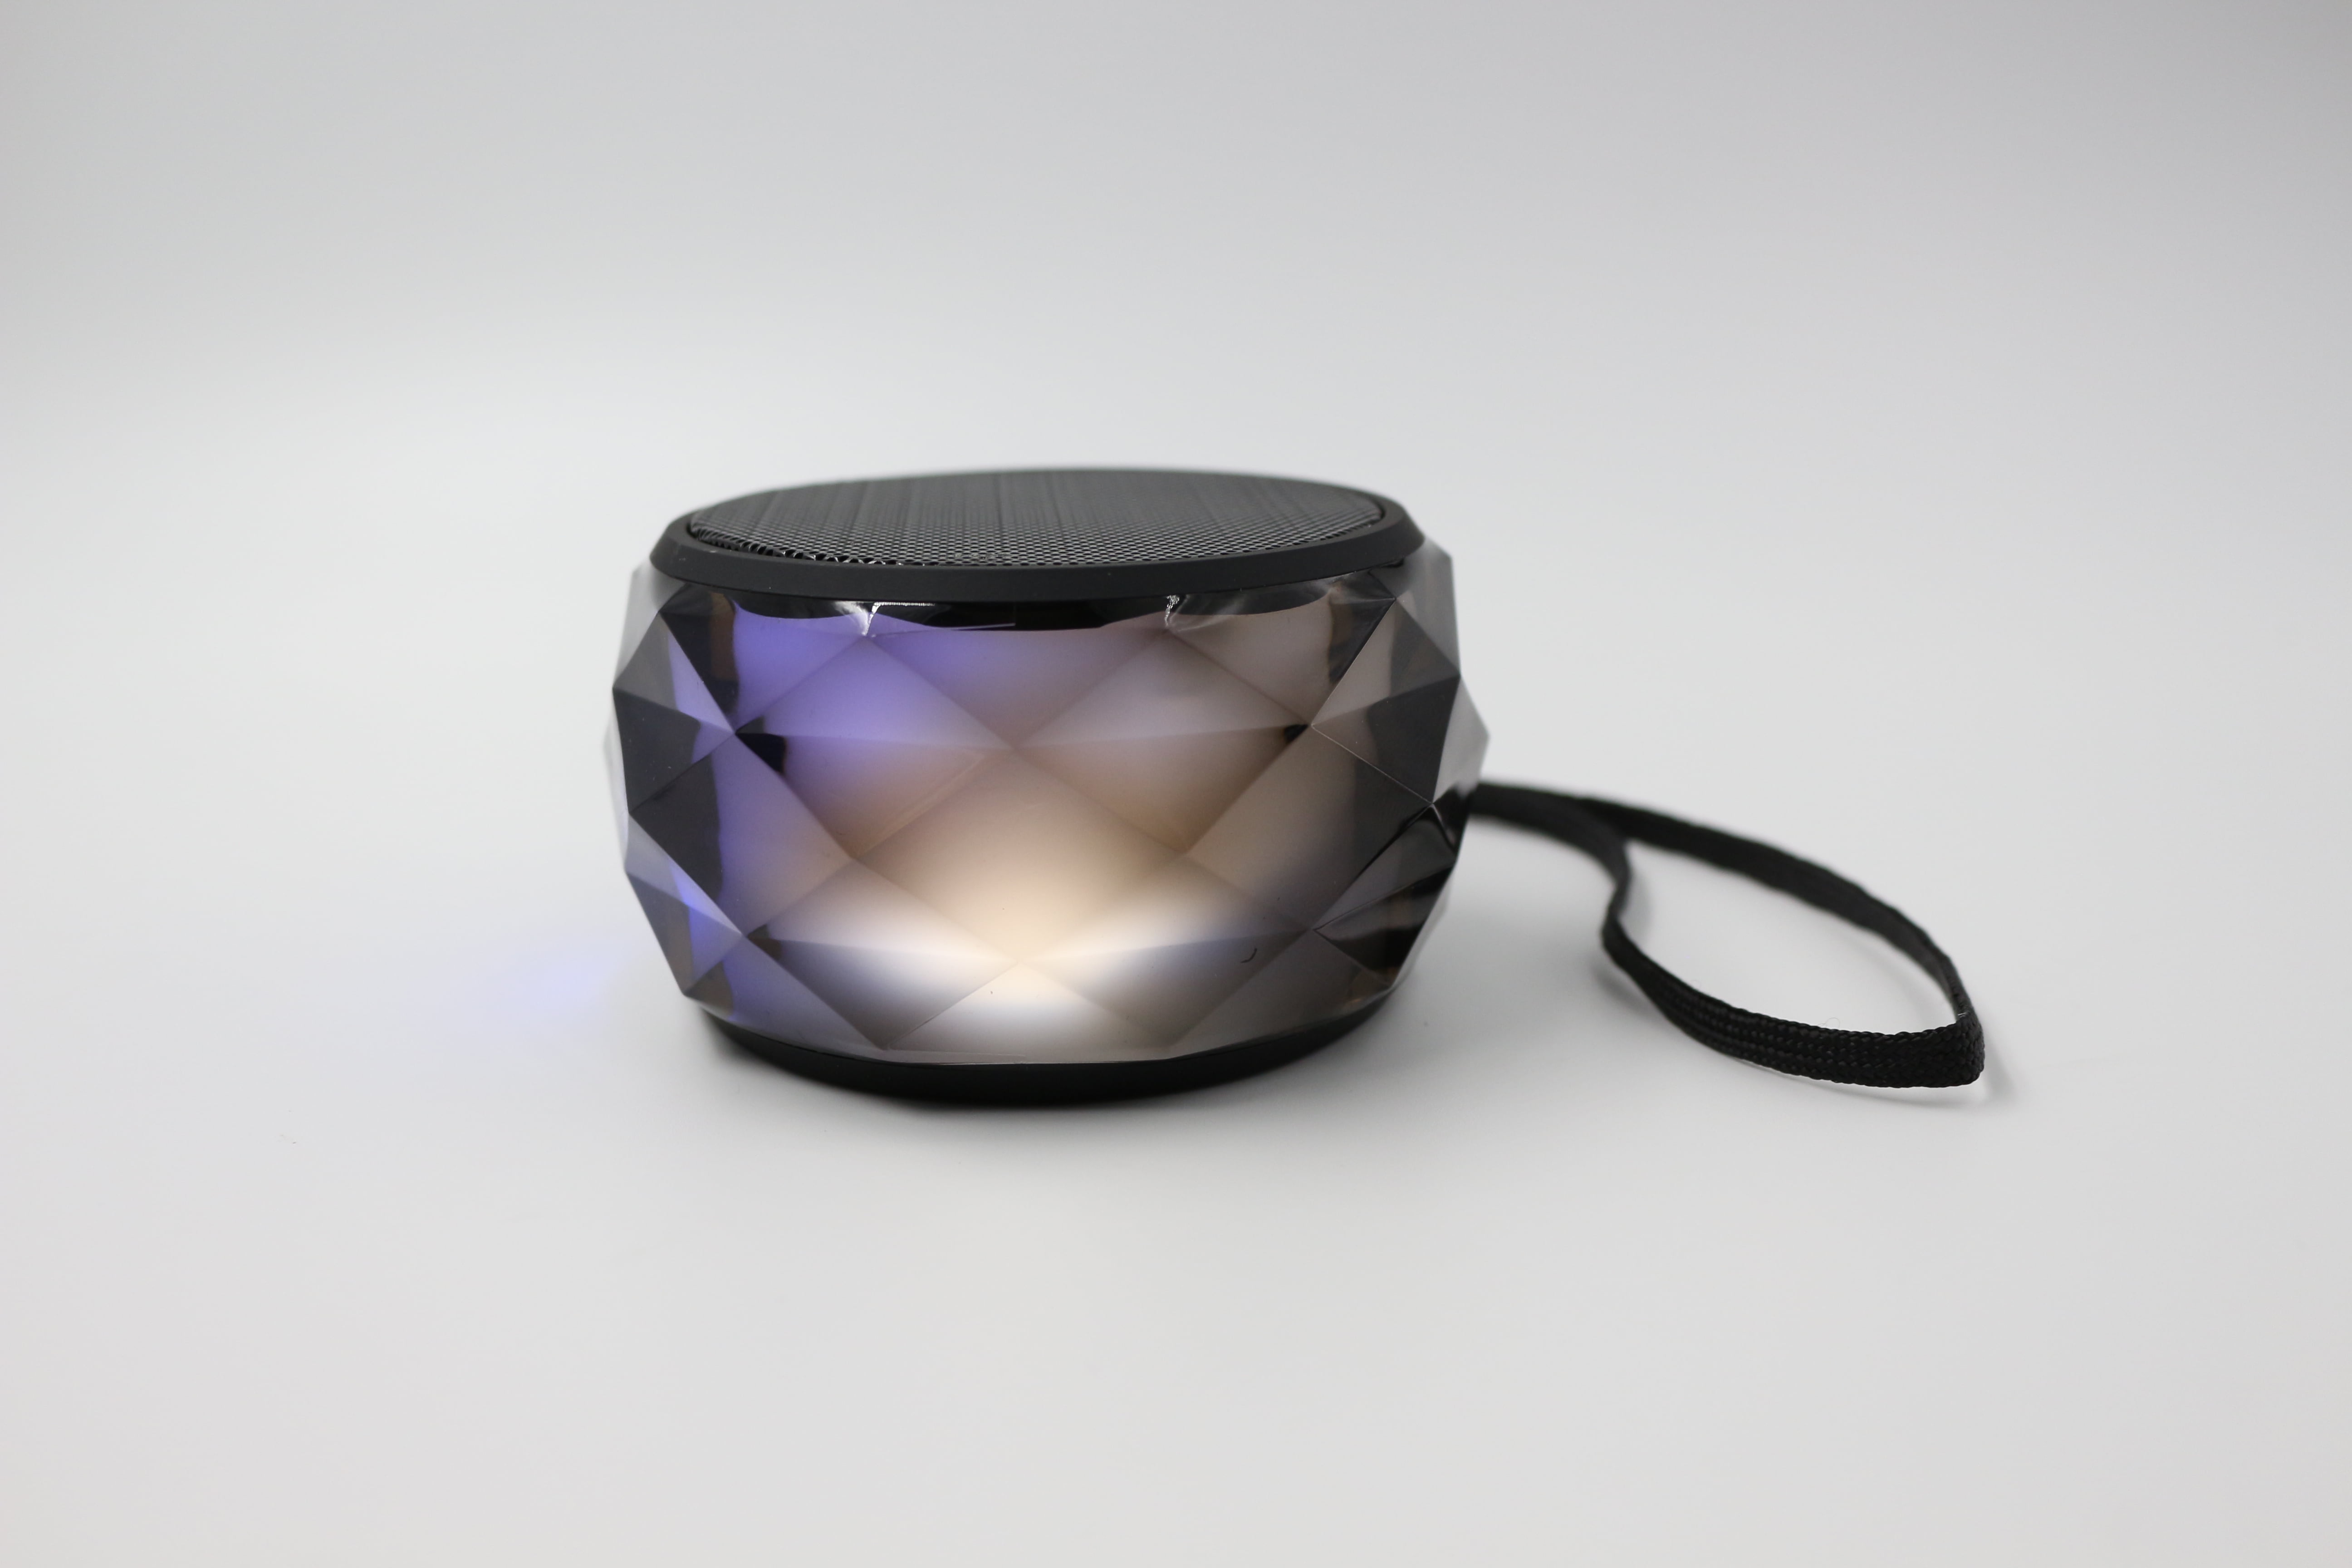 prism beats bluetooth speaker walmart